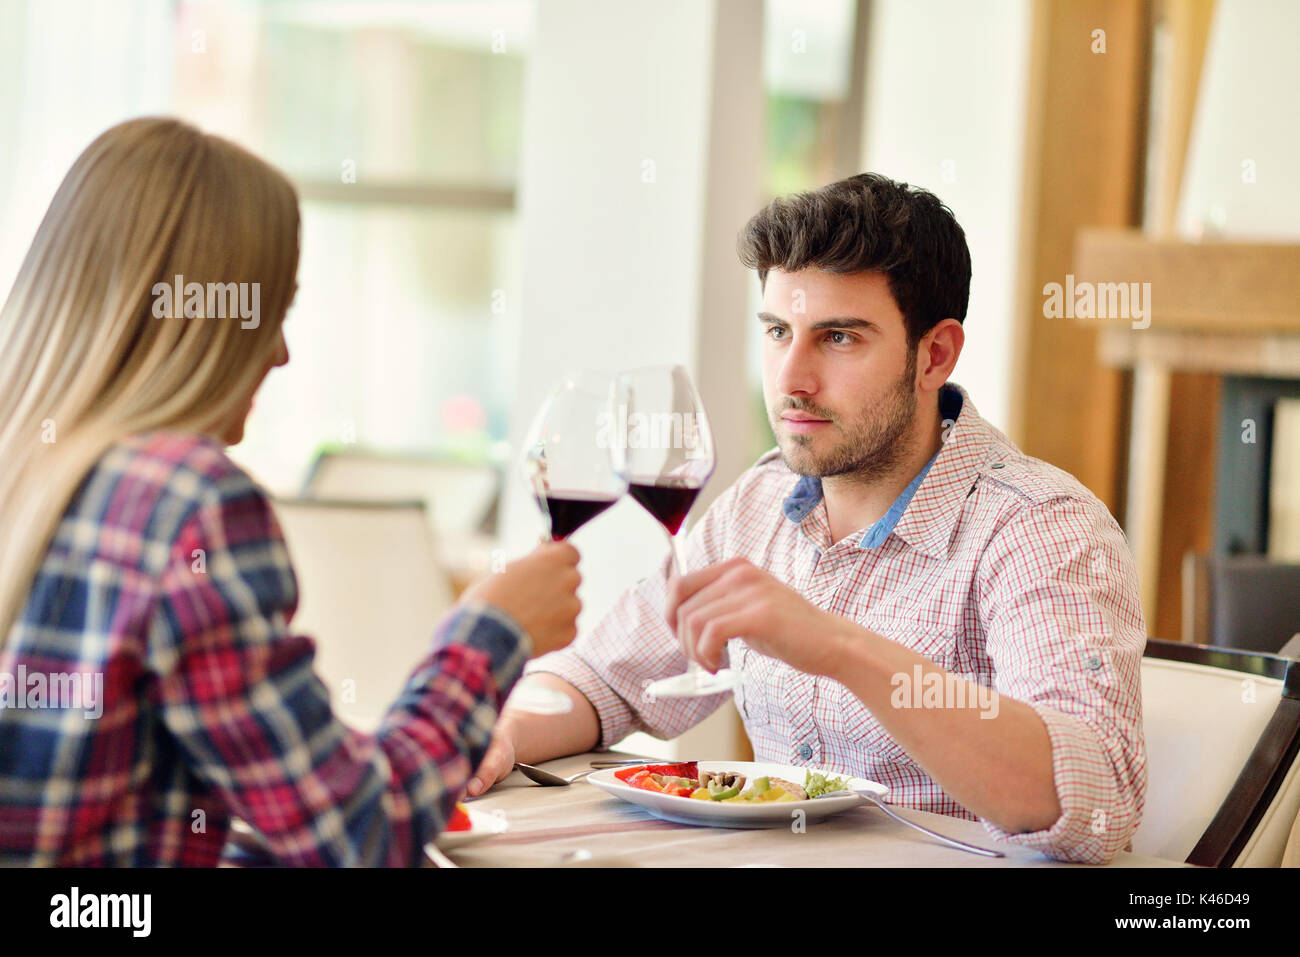 Romantic lunch dates